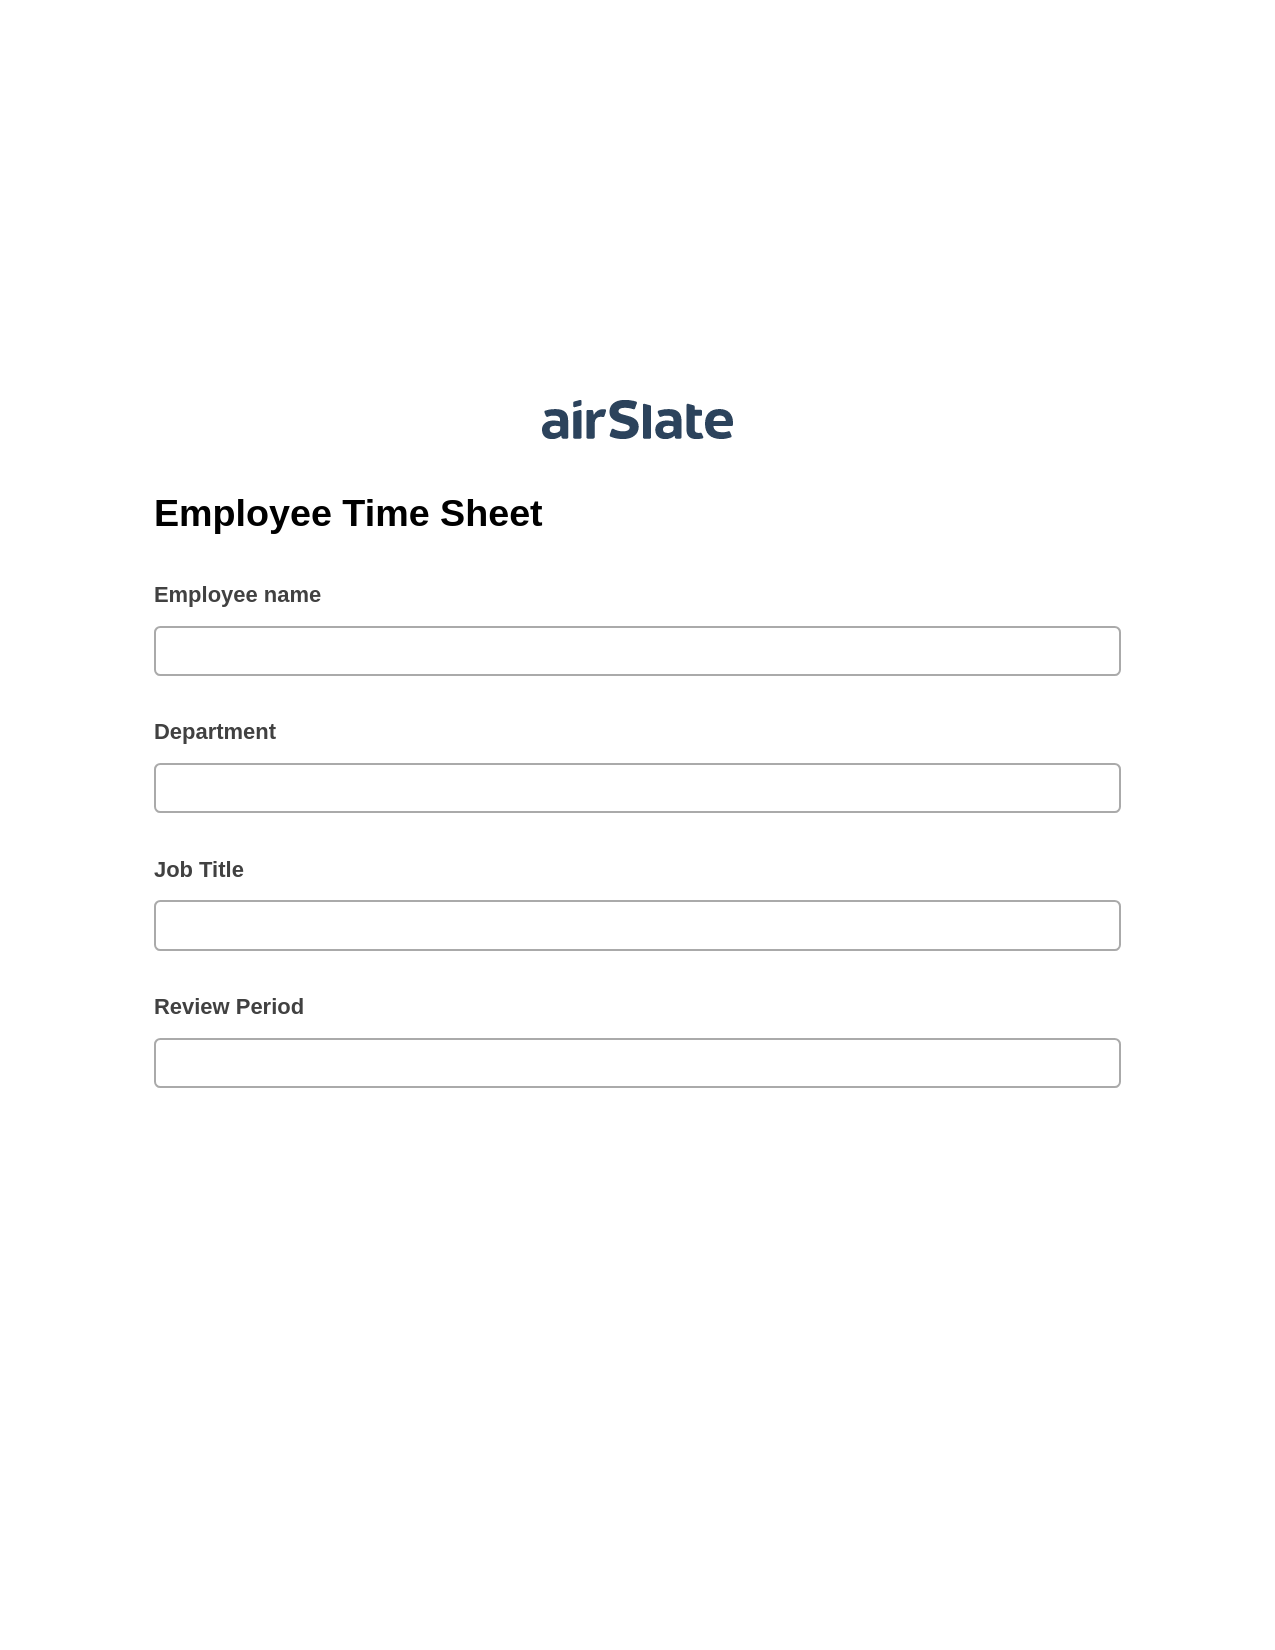 Employee Time Sheet Pre-fill Document Bot, Remove Slate Bot, Slack Two-Way Binding Bot